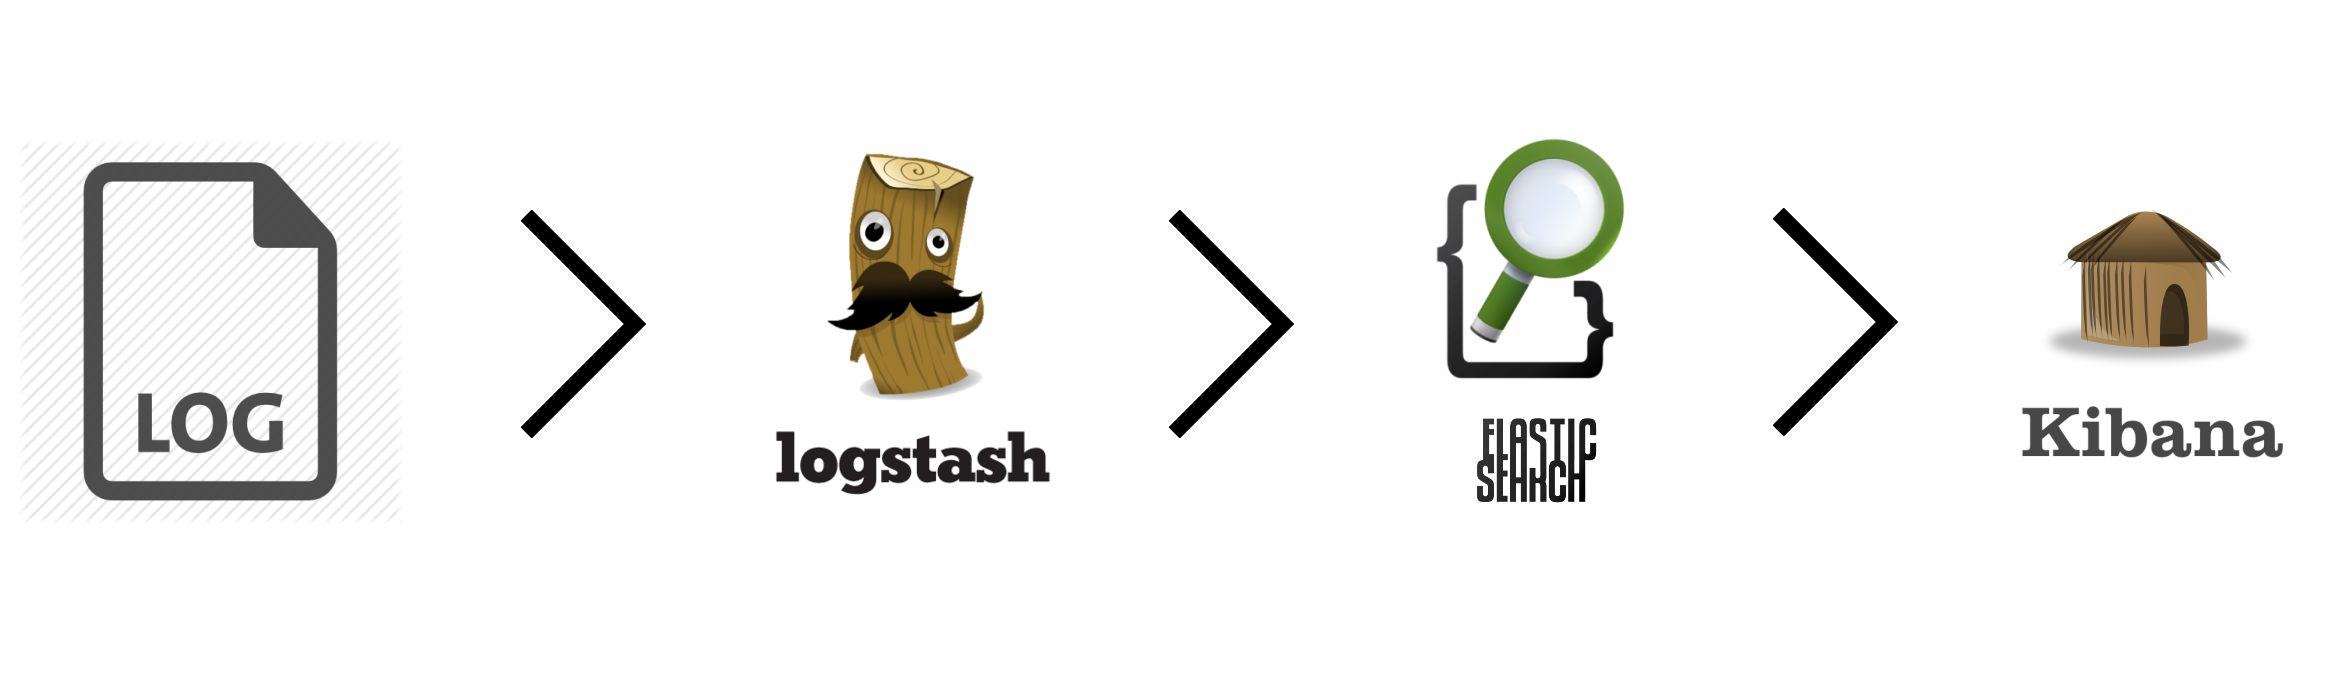 Dai log attraverso Logstash e Elasticsearch a Kibana